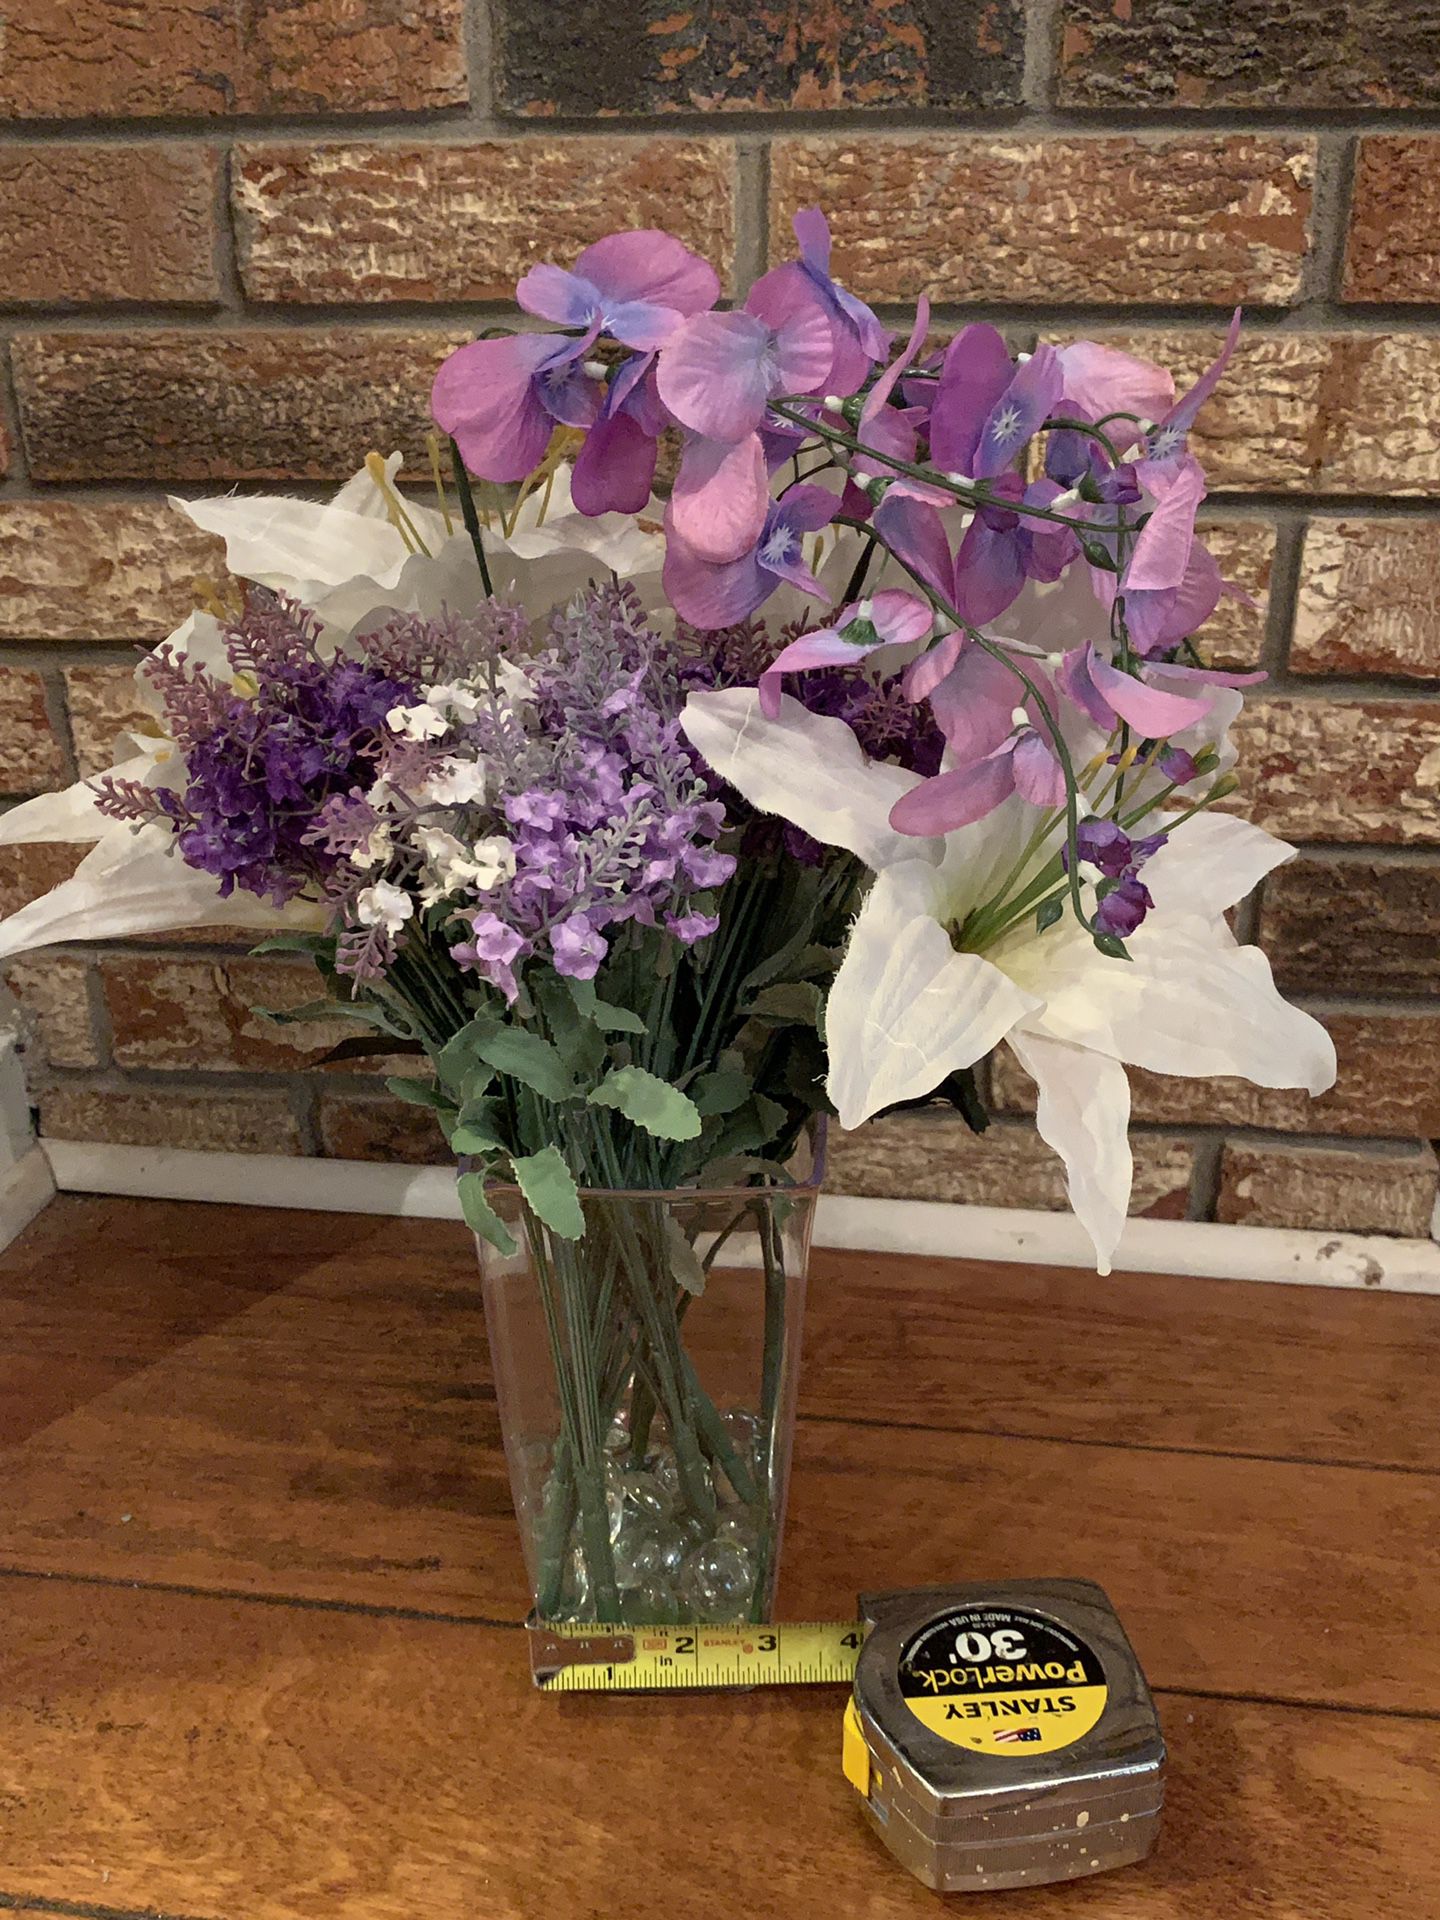 4 Wedding table top lavender flower arrangements